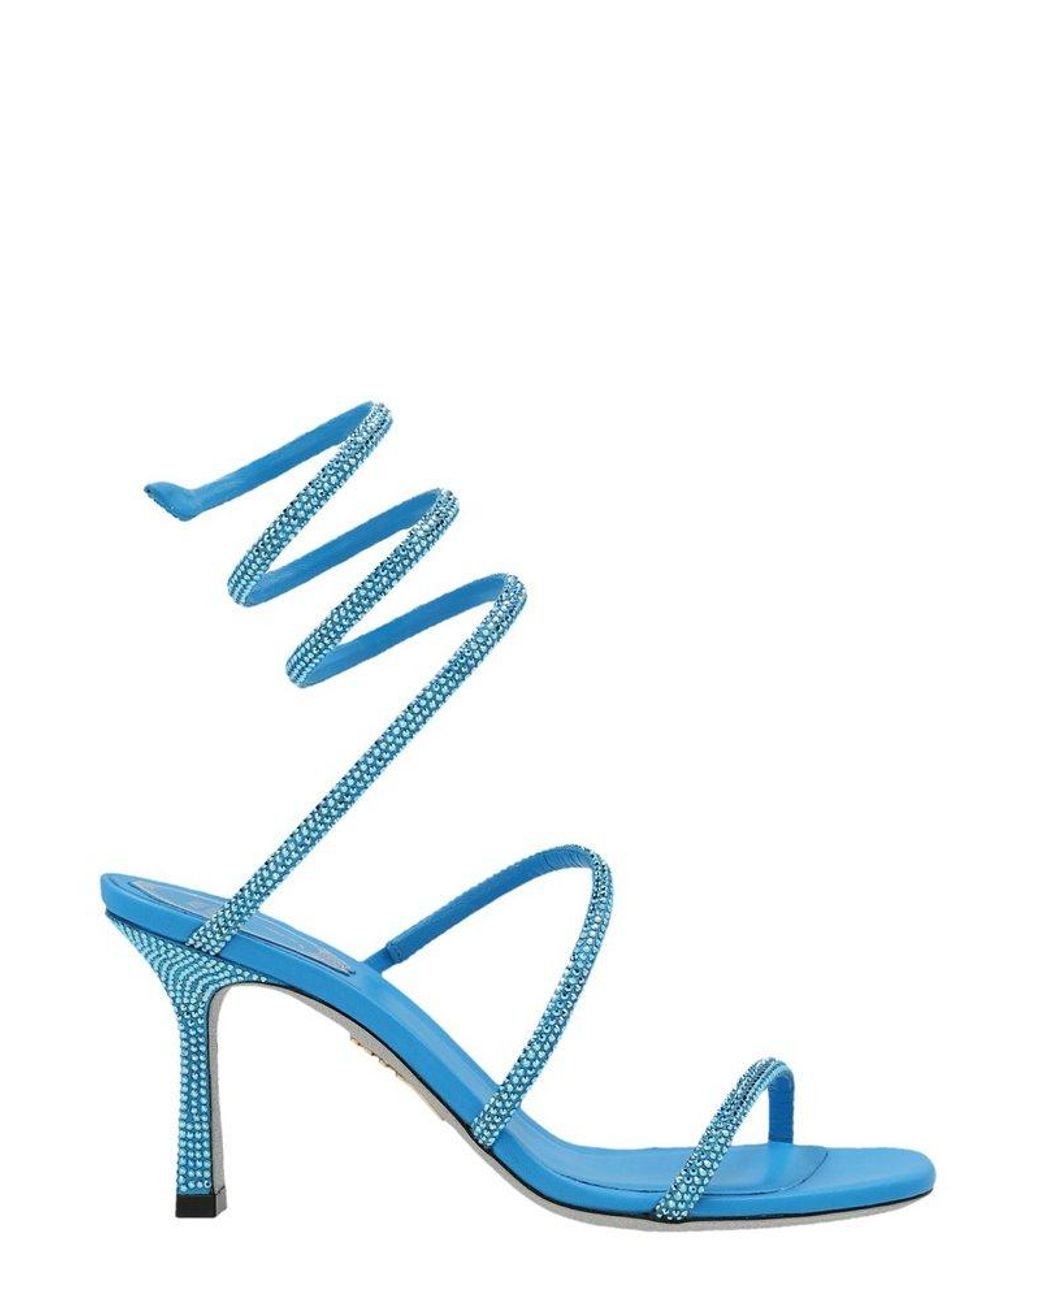 Rene Caovilla Cleo Crystal Embellished Sandals in Blue | Lyst